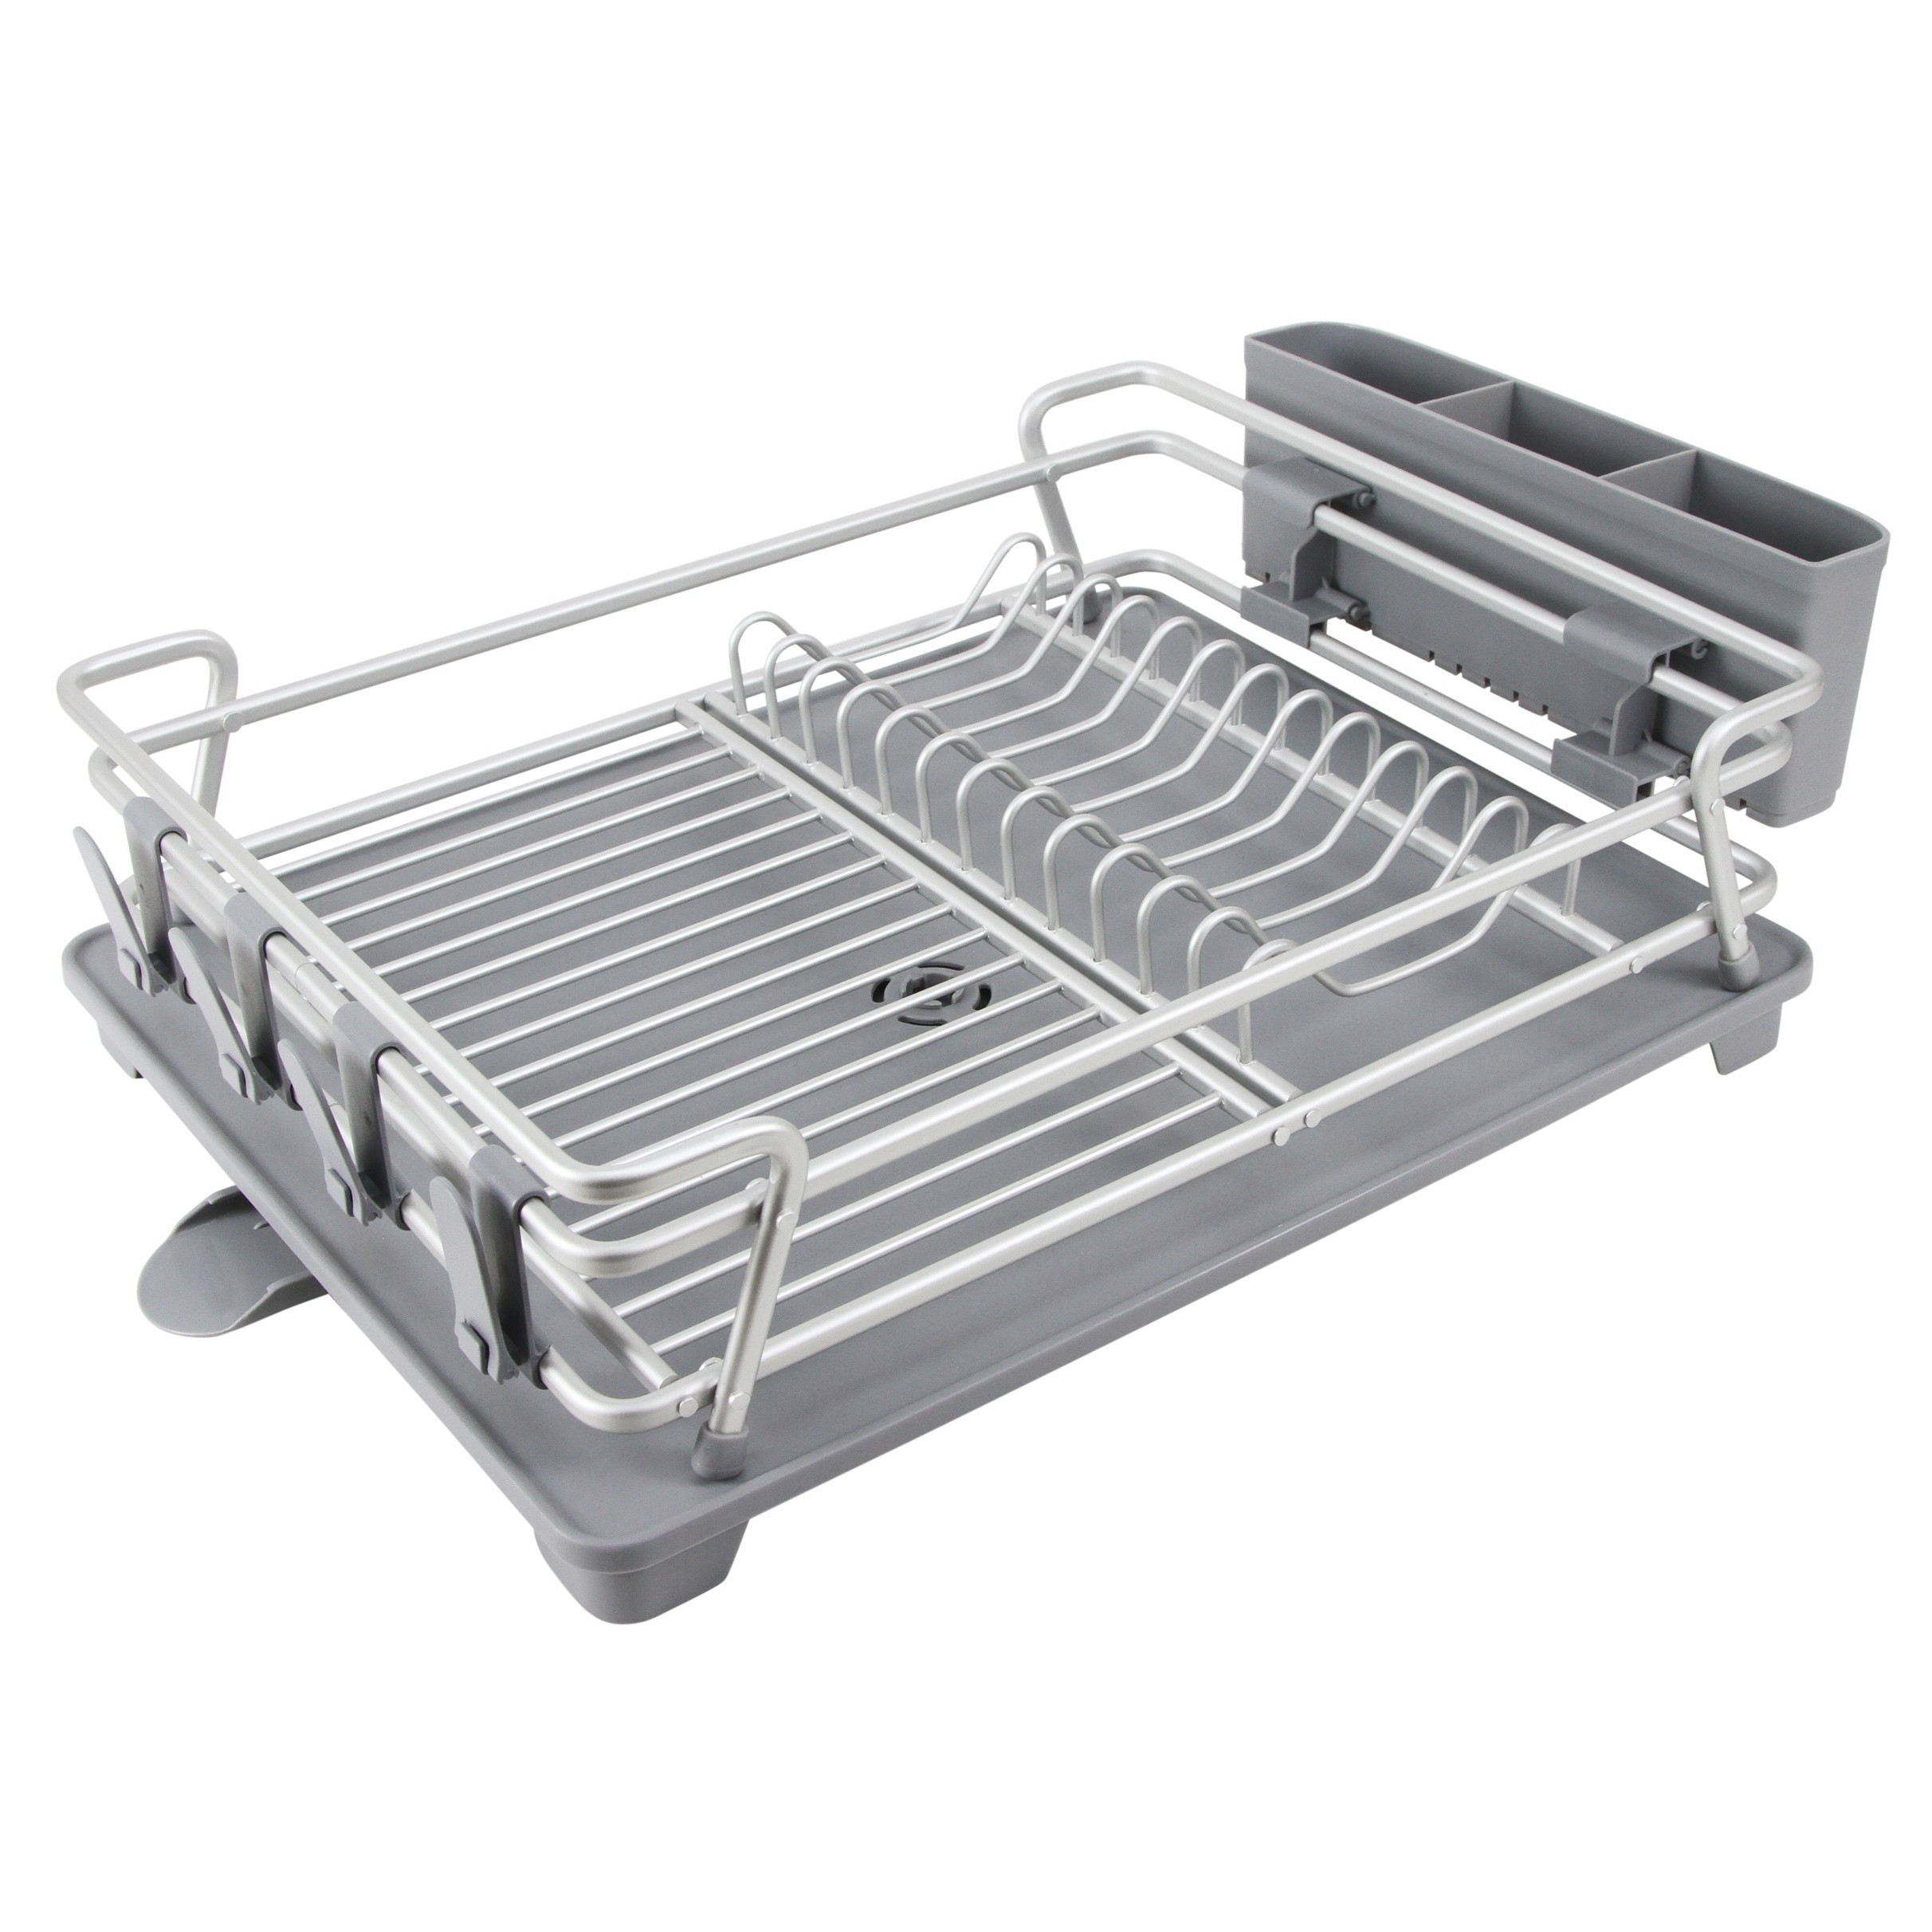 Cozyblock aluminum dish drying rack with utensil